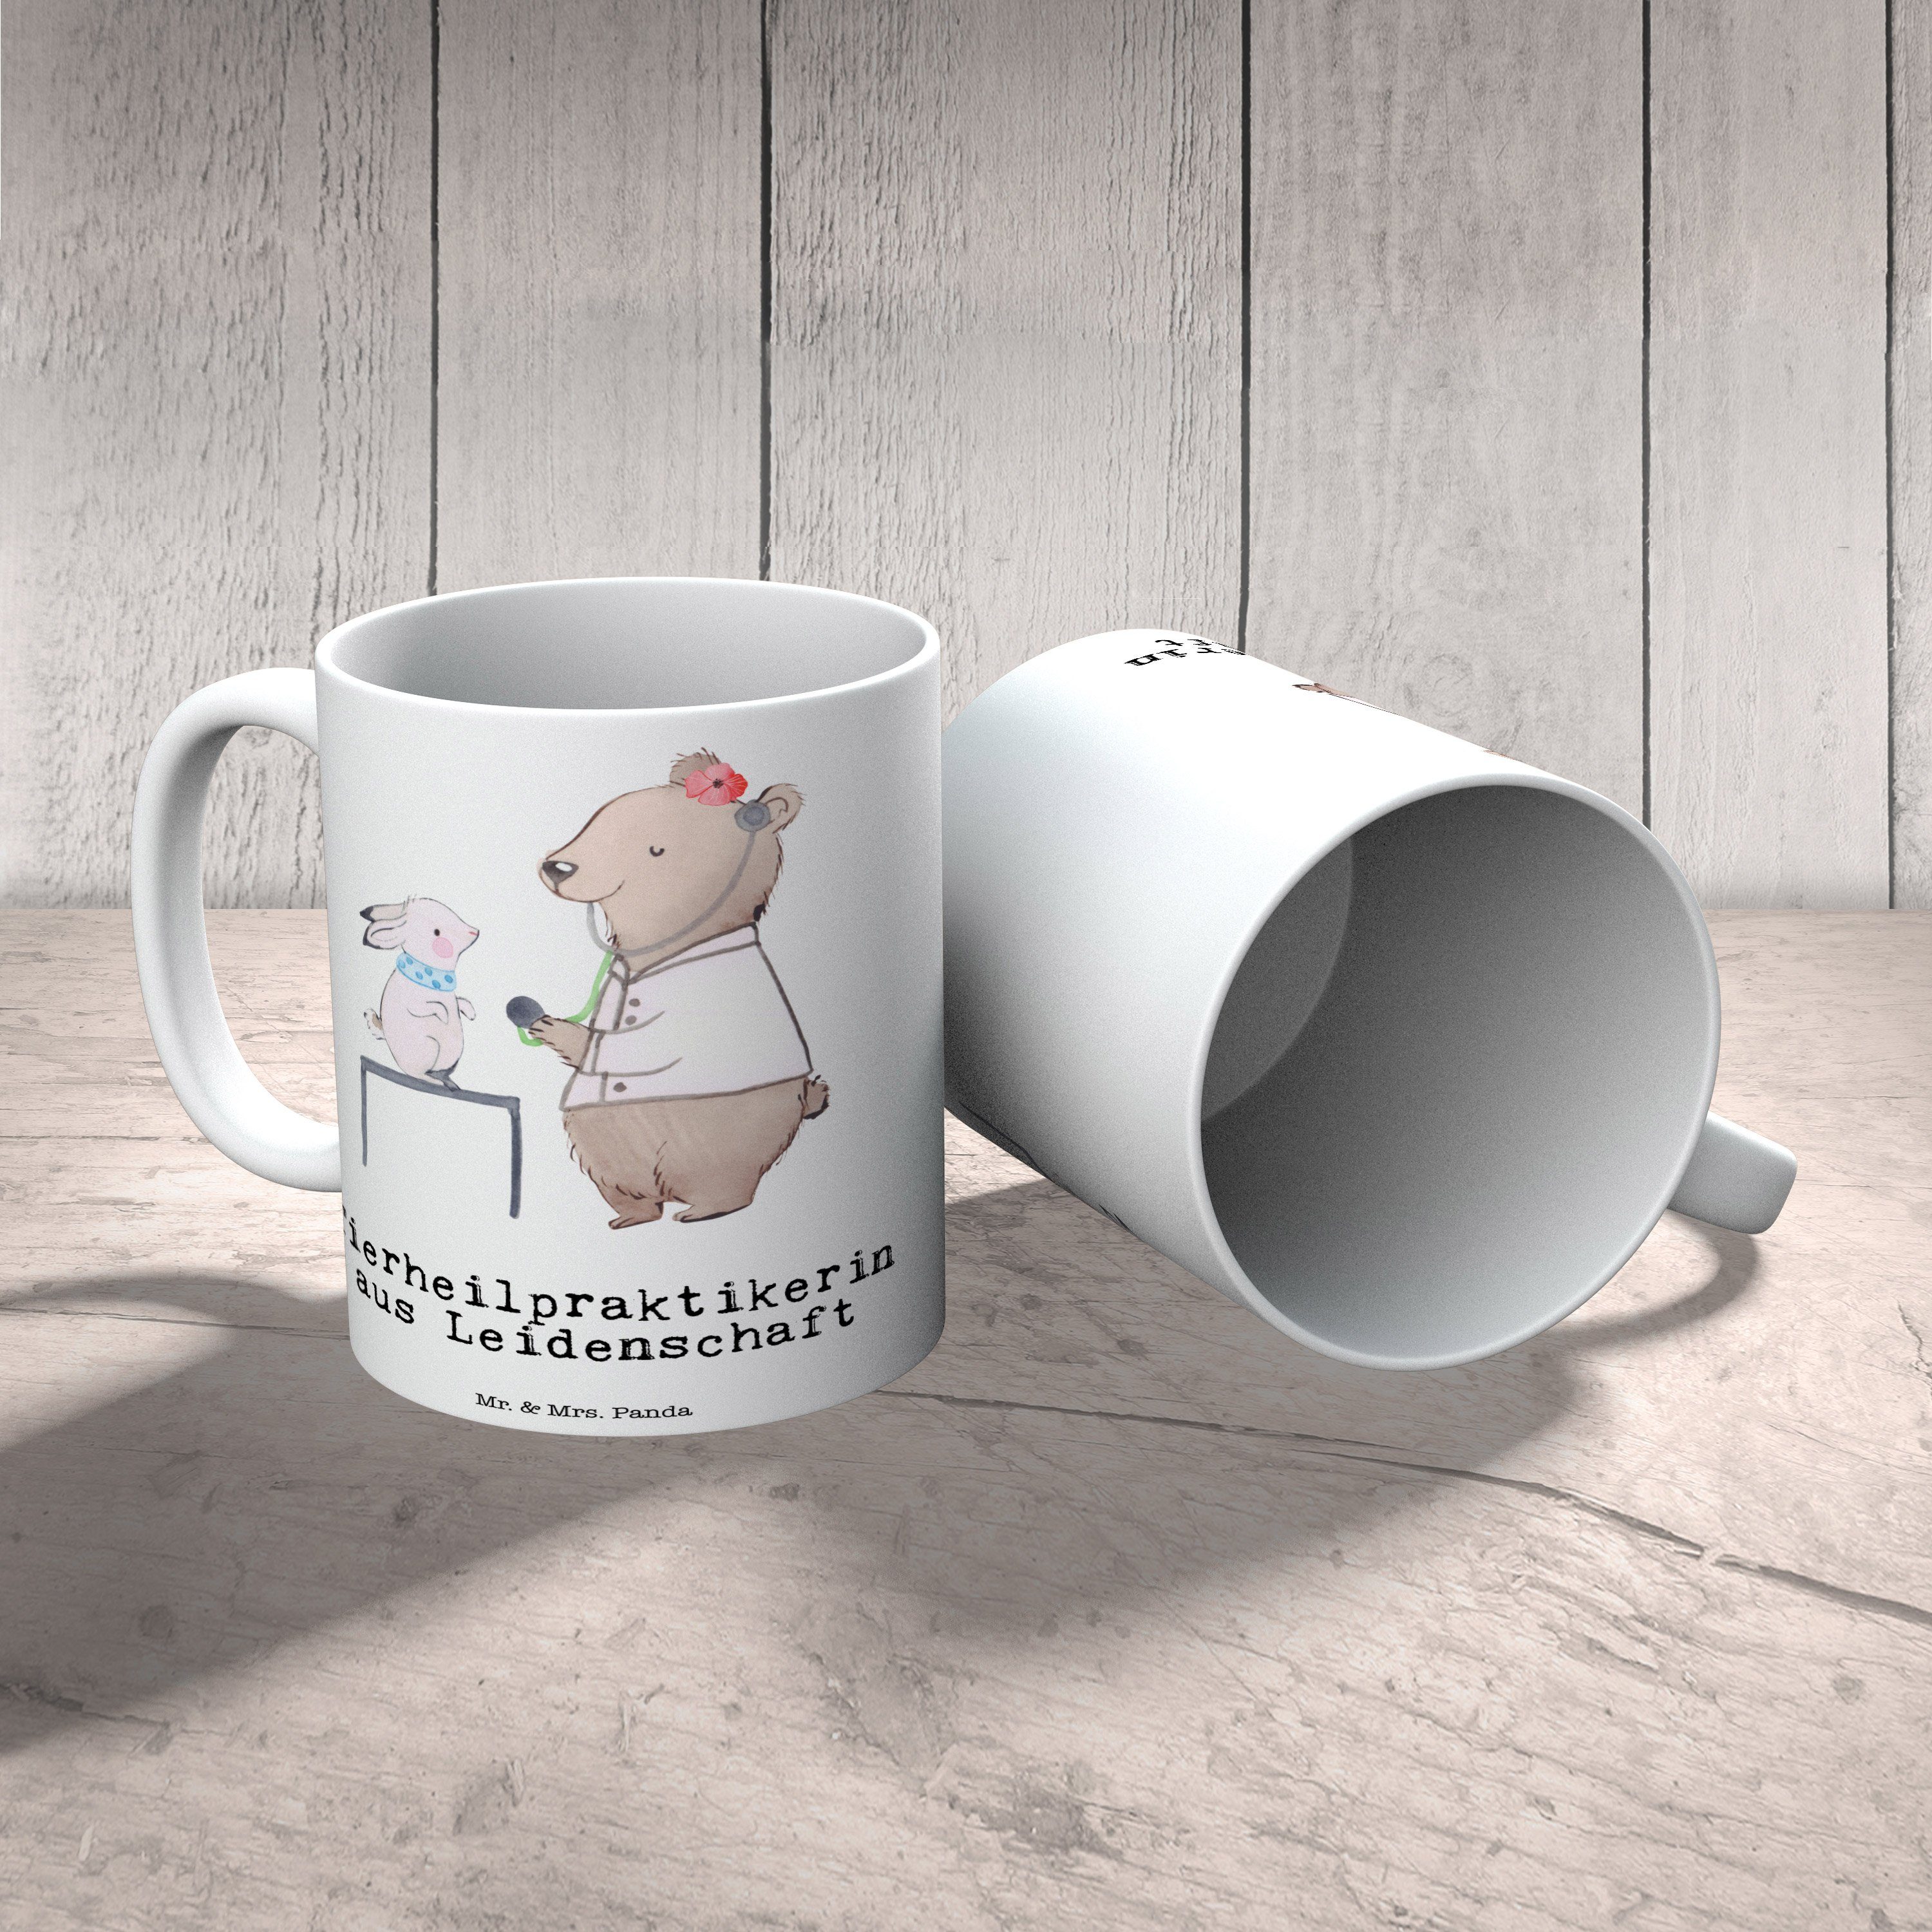 & Tierheilpraktikerin Keramik Tasse Mrs. - Weiß Geschenk, Mr. - Panda Kaffeebecher, Leidenschaft aus